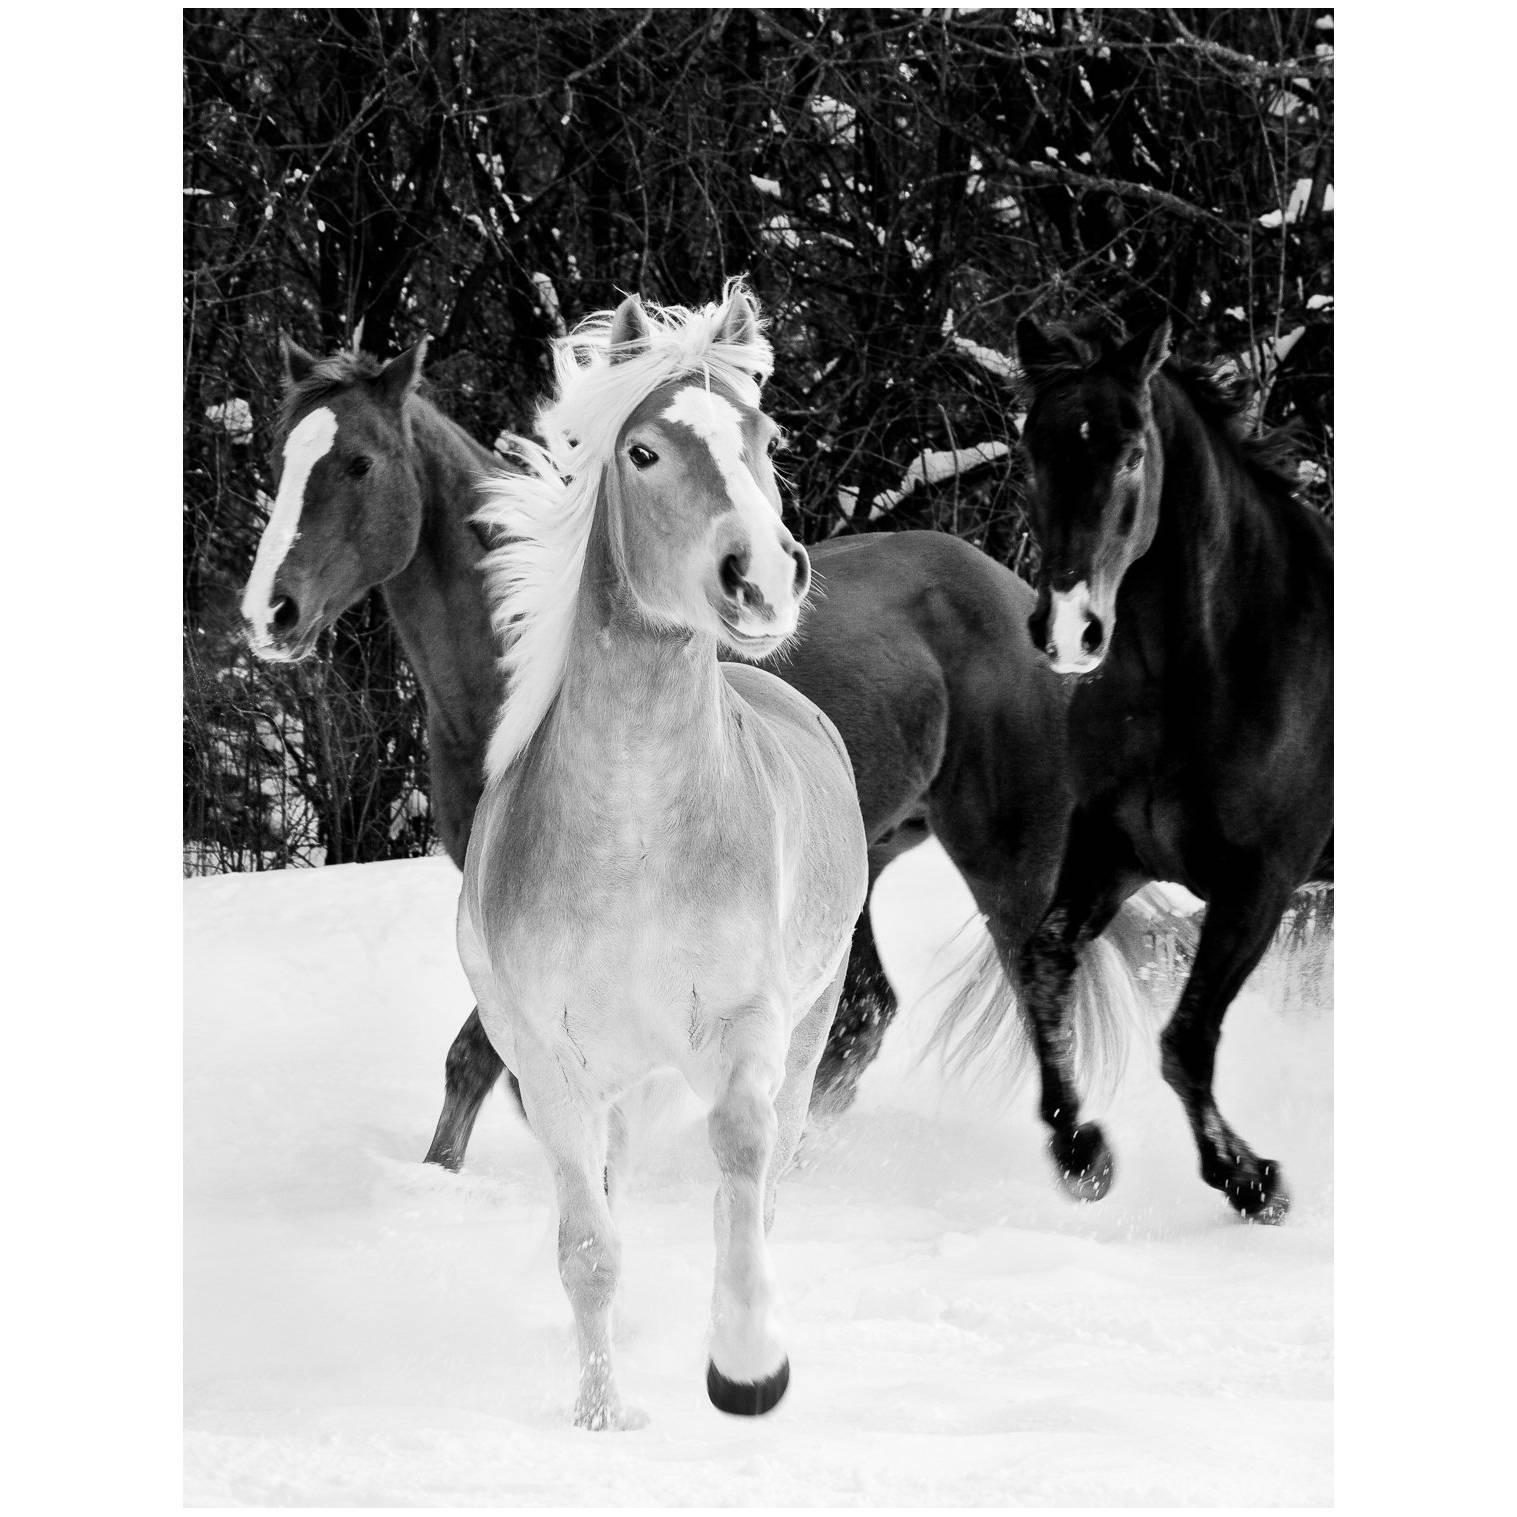 21st Century Giclee Print Photograph "Three Horses in Snow", Janet Mesic Mackie